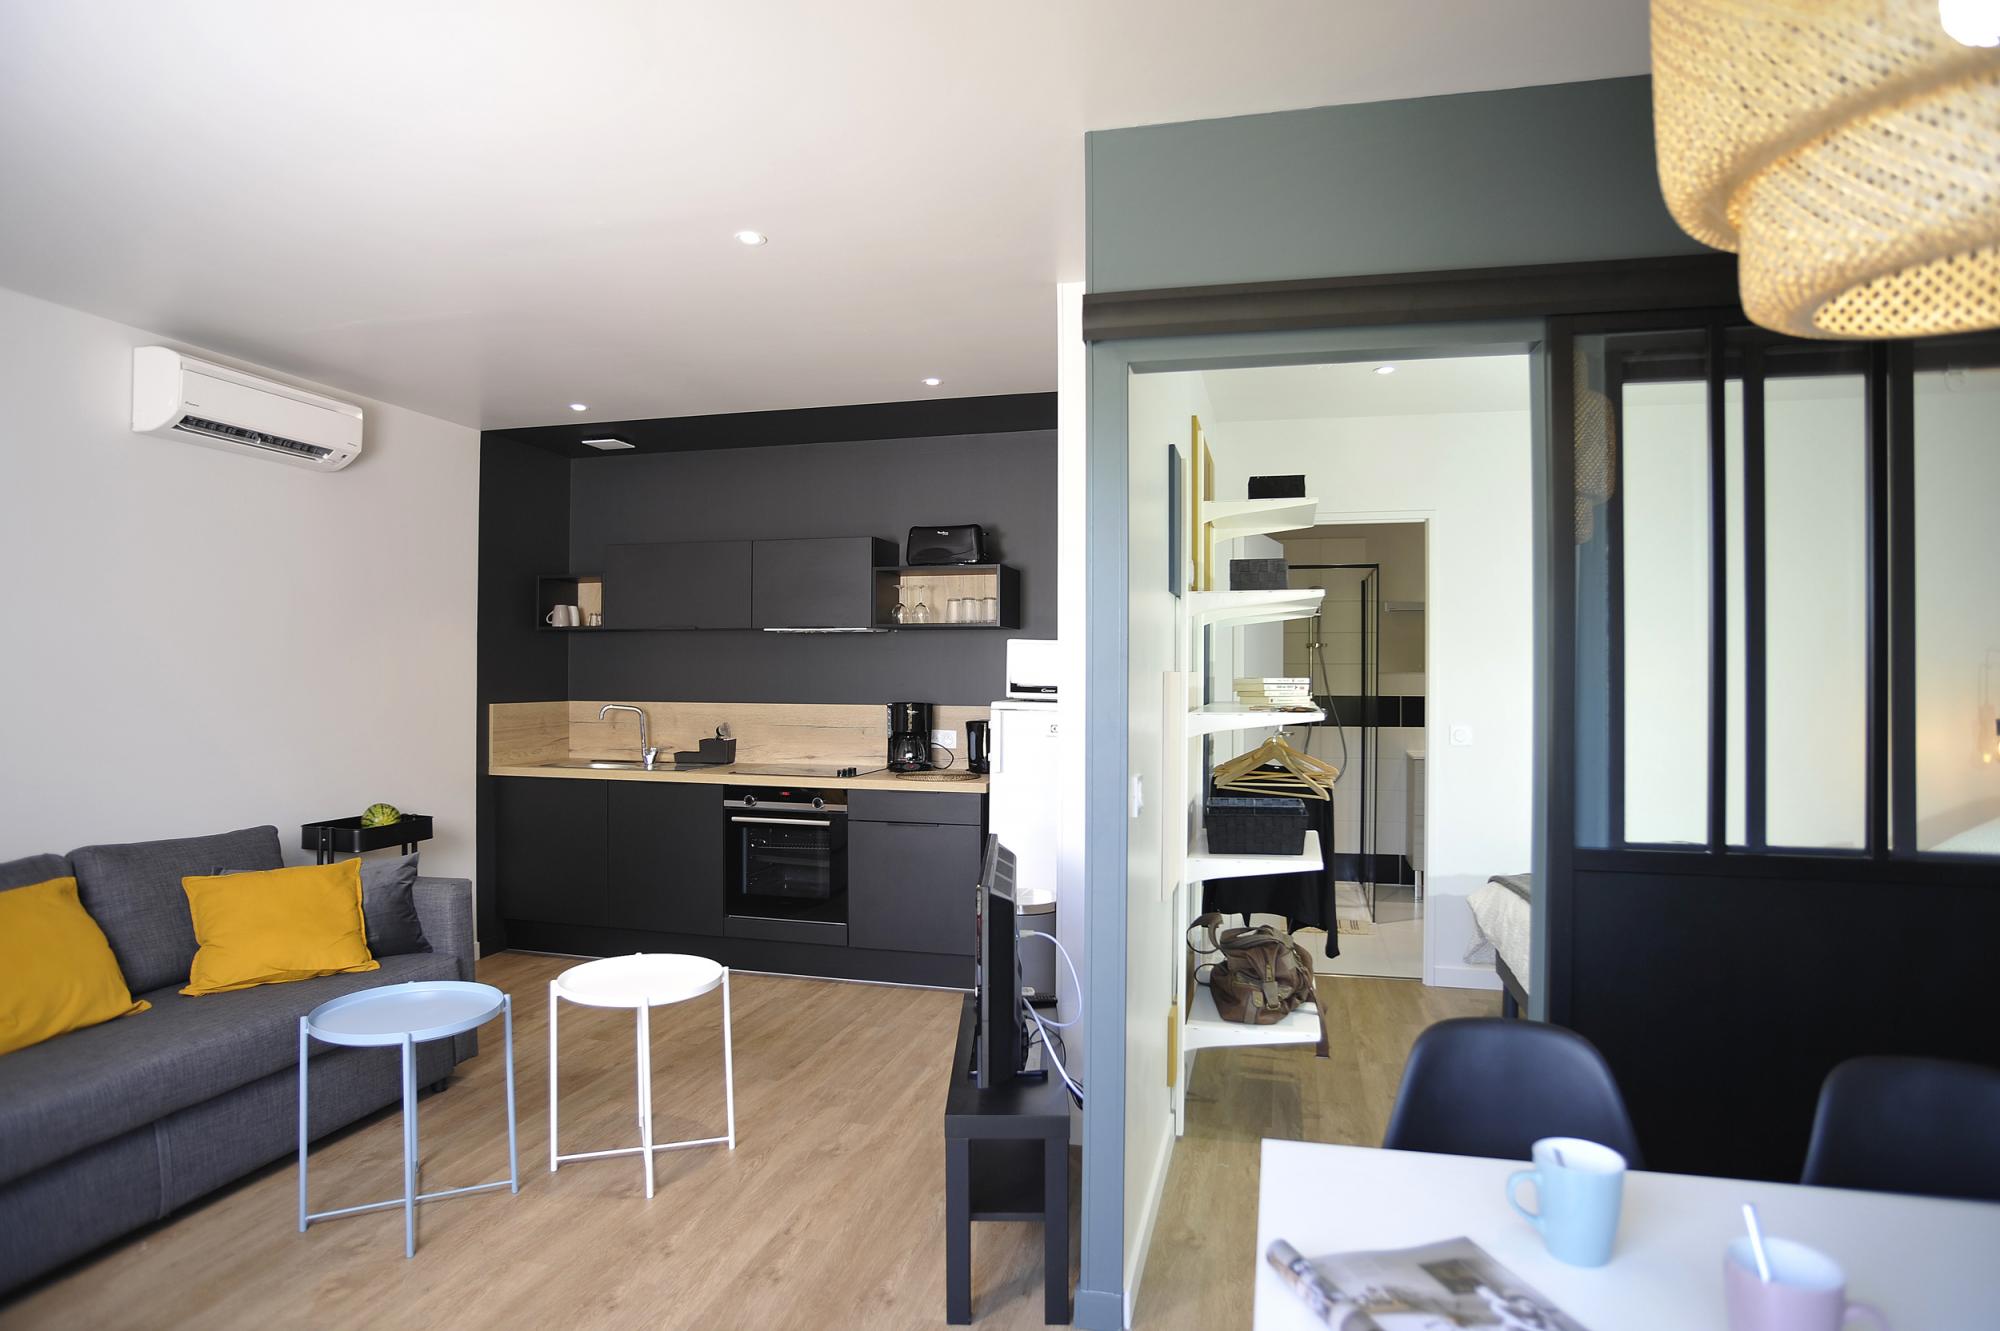 Location appartement 12 meublÃ© avec terrasse Ã  Jonzac (Charente Maritime 17) 